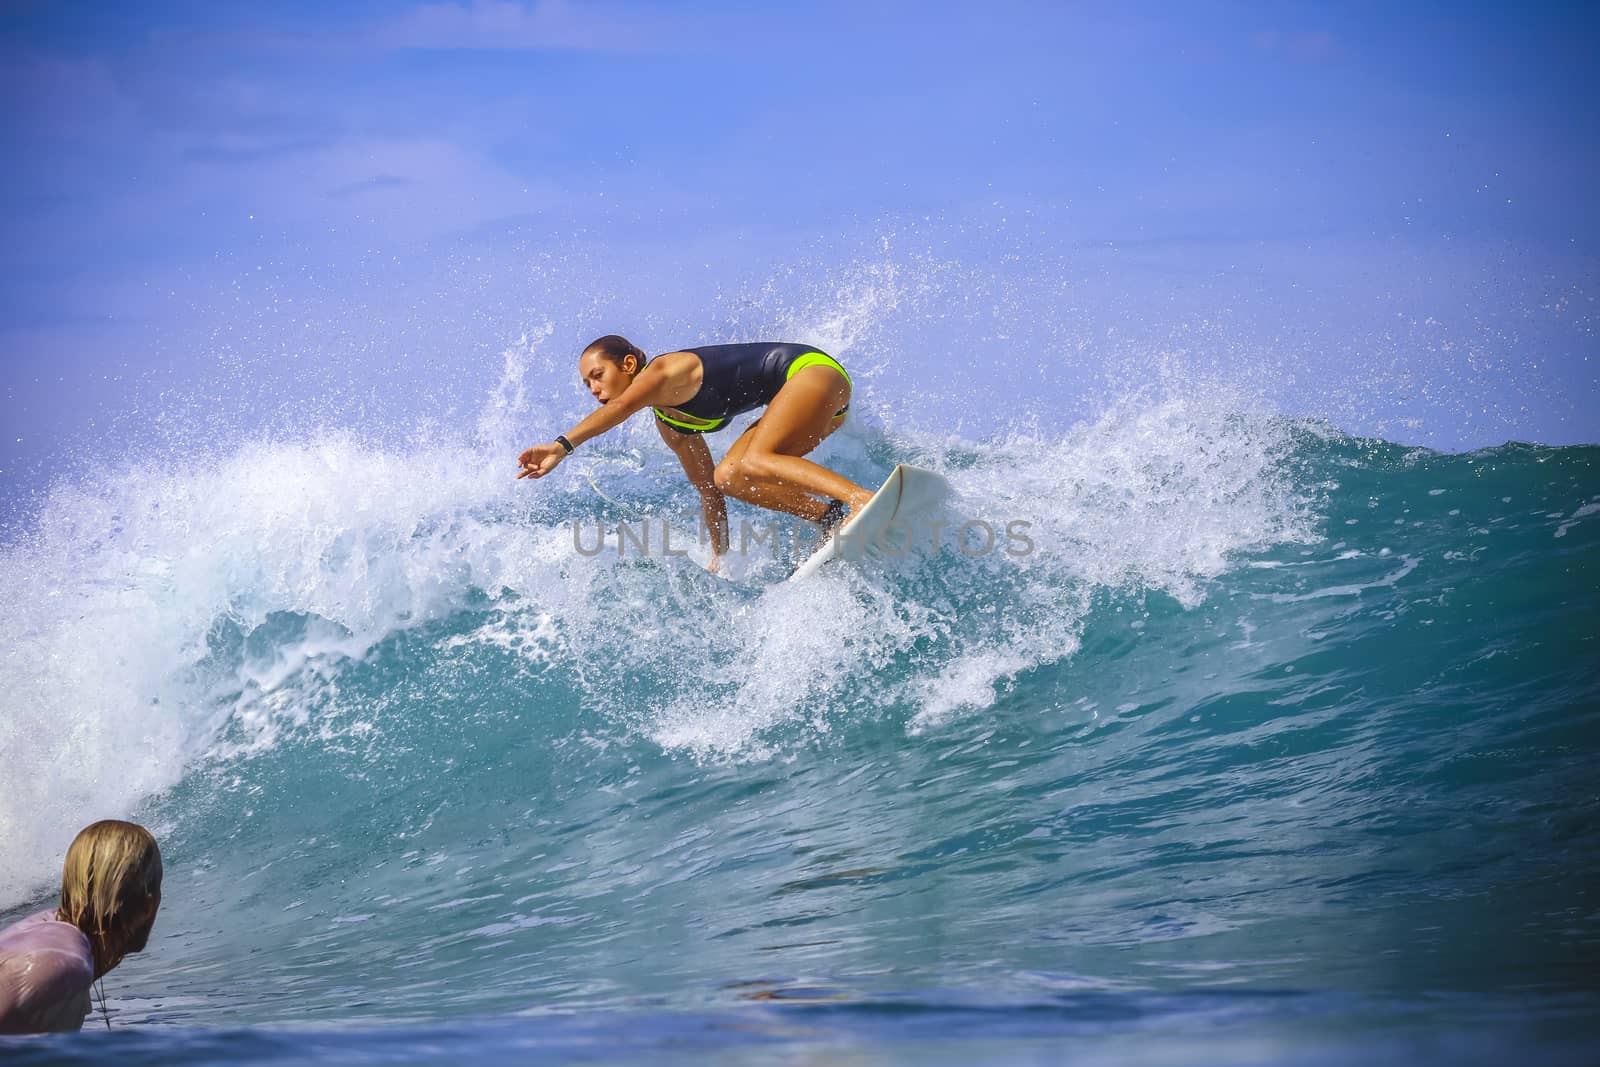 Surfer girl on Amazing Blue Wave, Bali island.